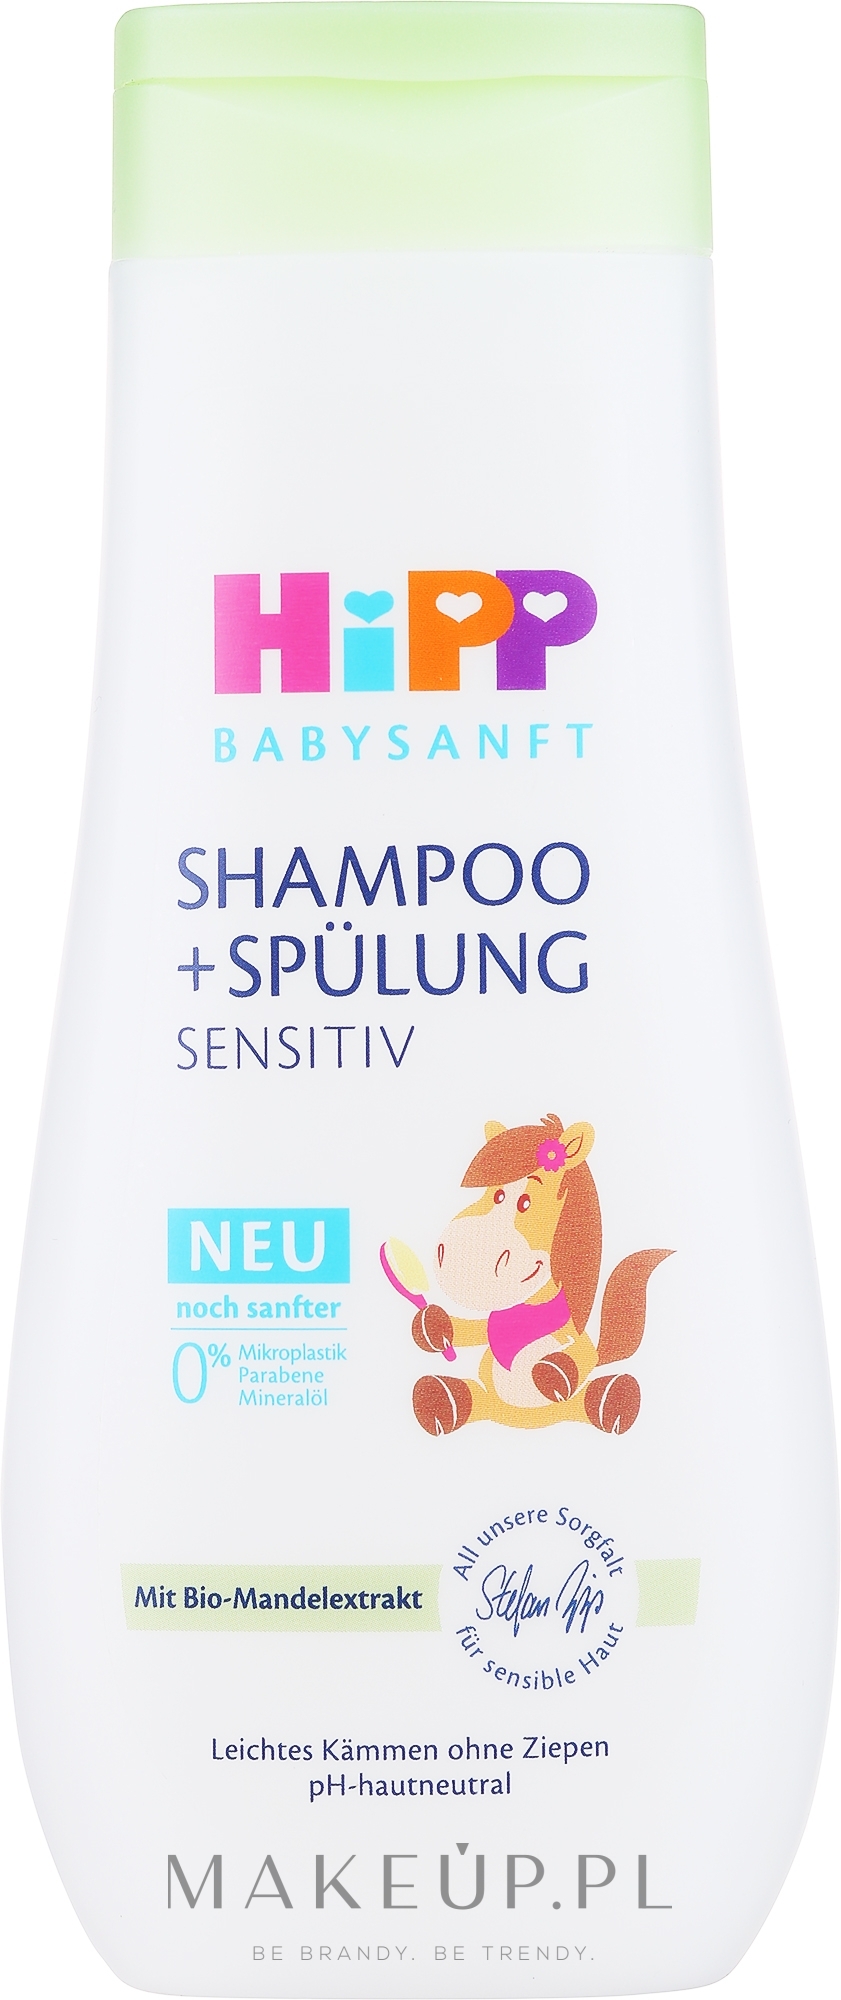 uczulenie na szampon hipp co robic